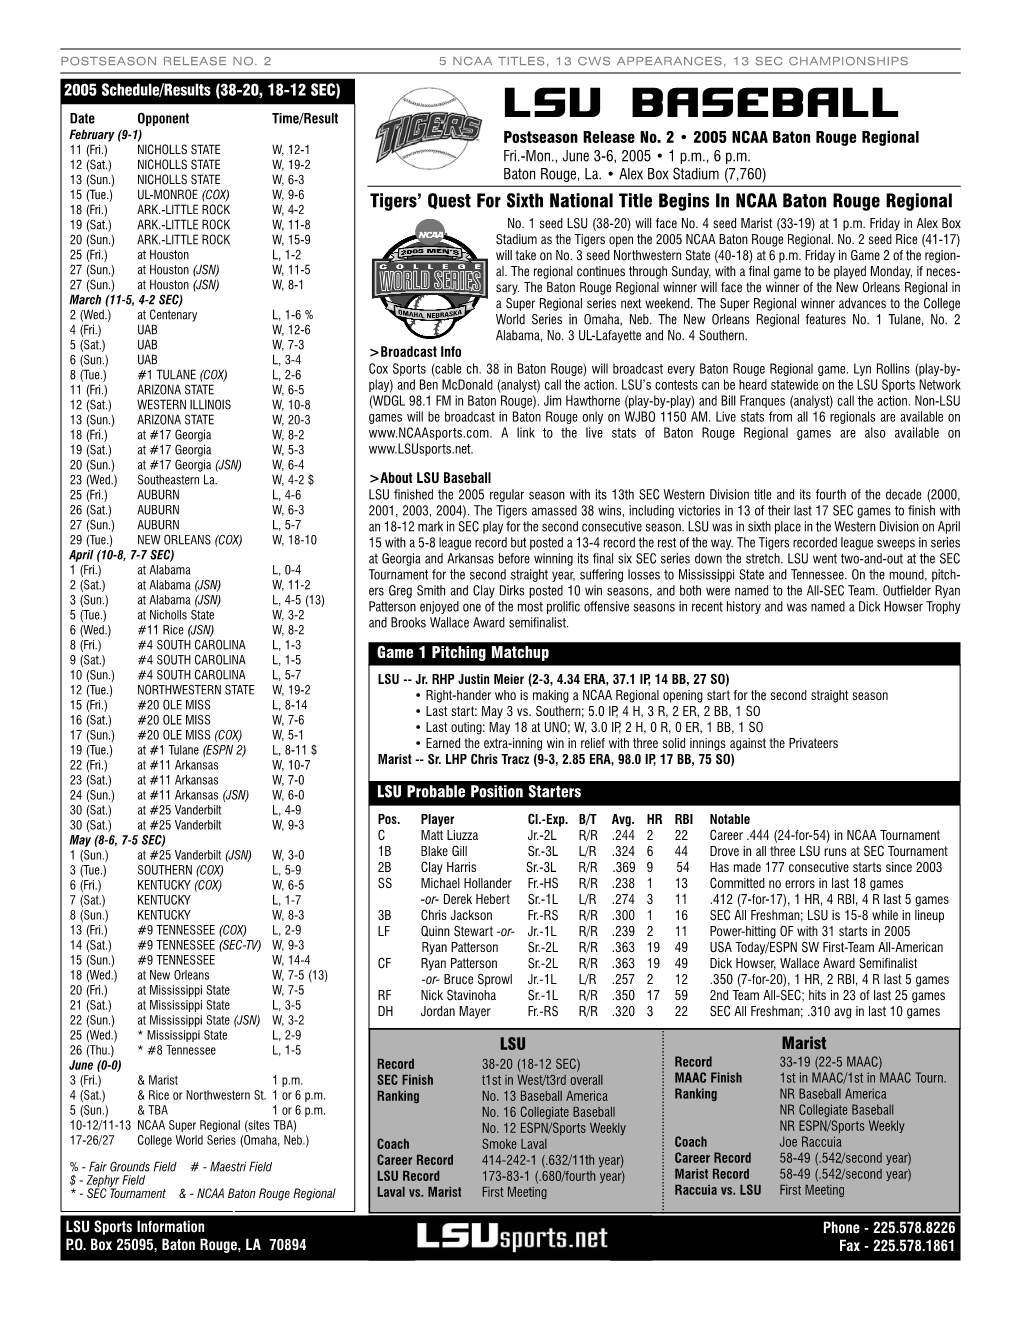 LSU Baseball 2005 NCAA Baton Rouge Regional